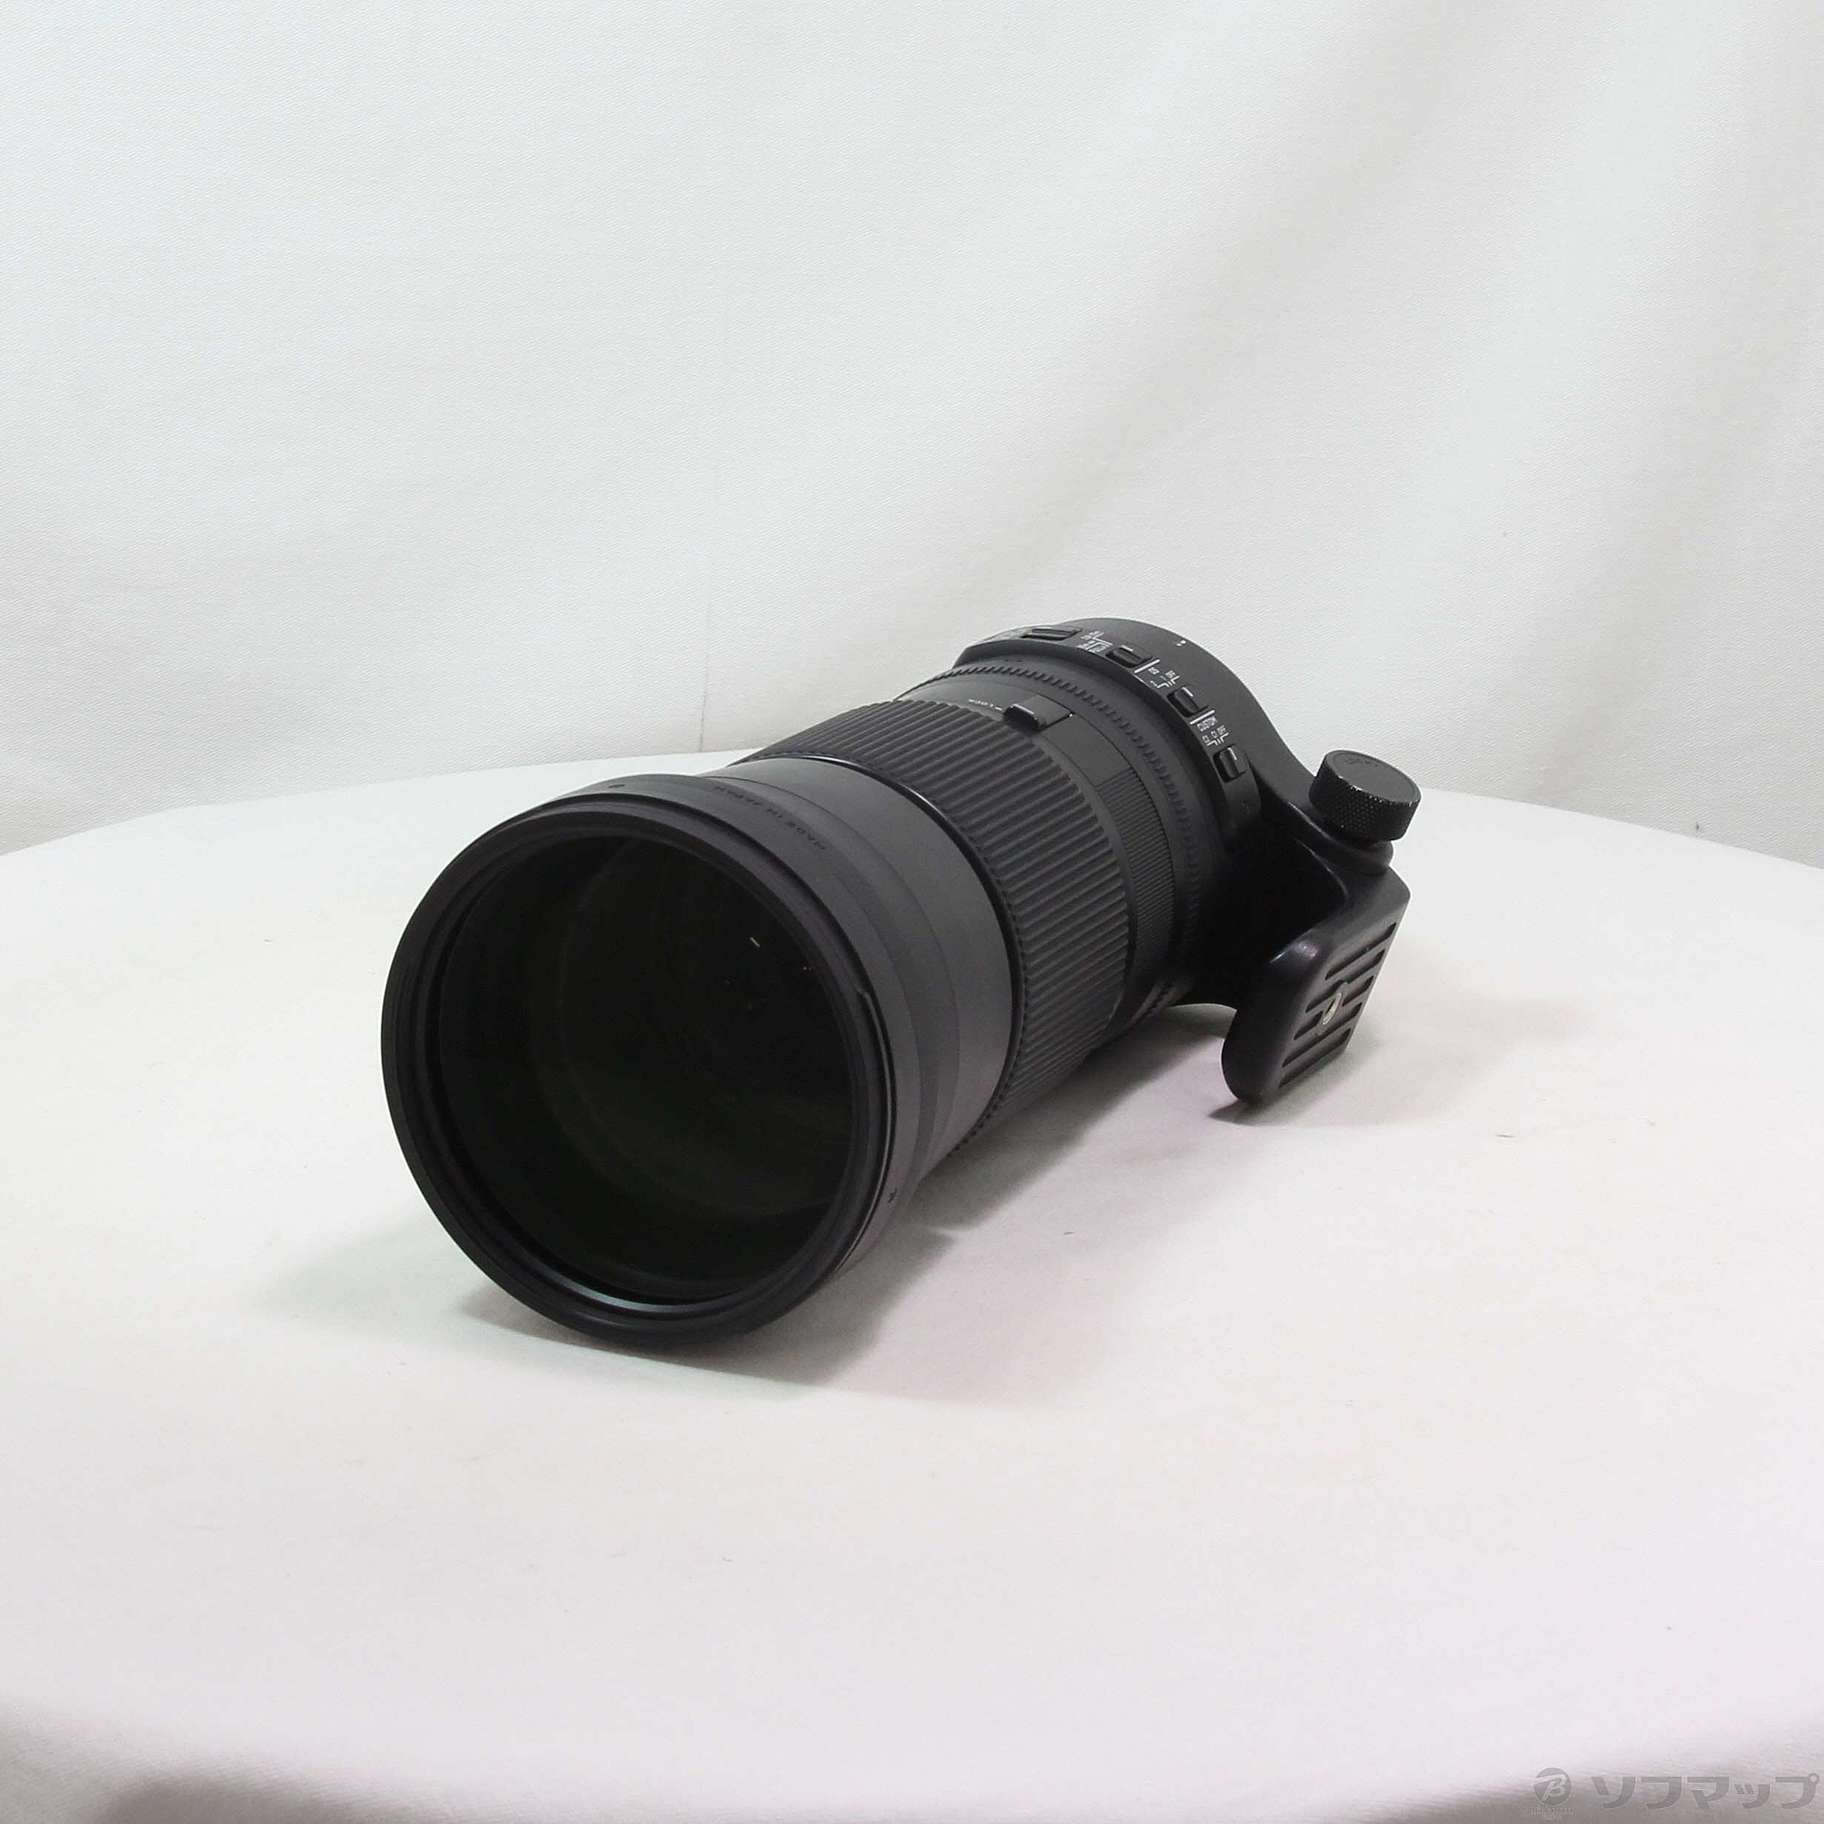 中古】SIGMA 150-600mm F5-6.3 DG OS HSM (Nikon用) Contemporary